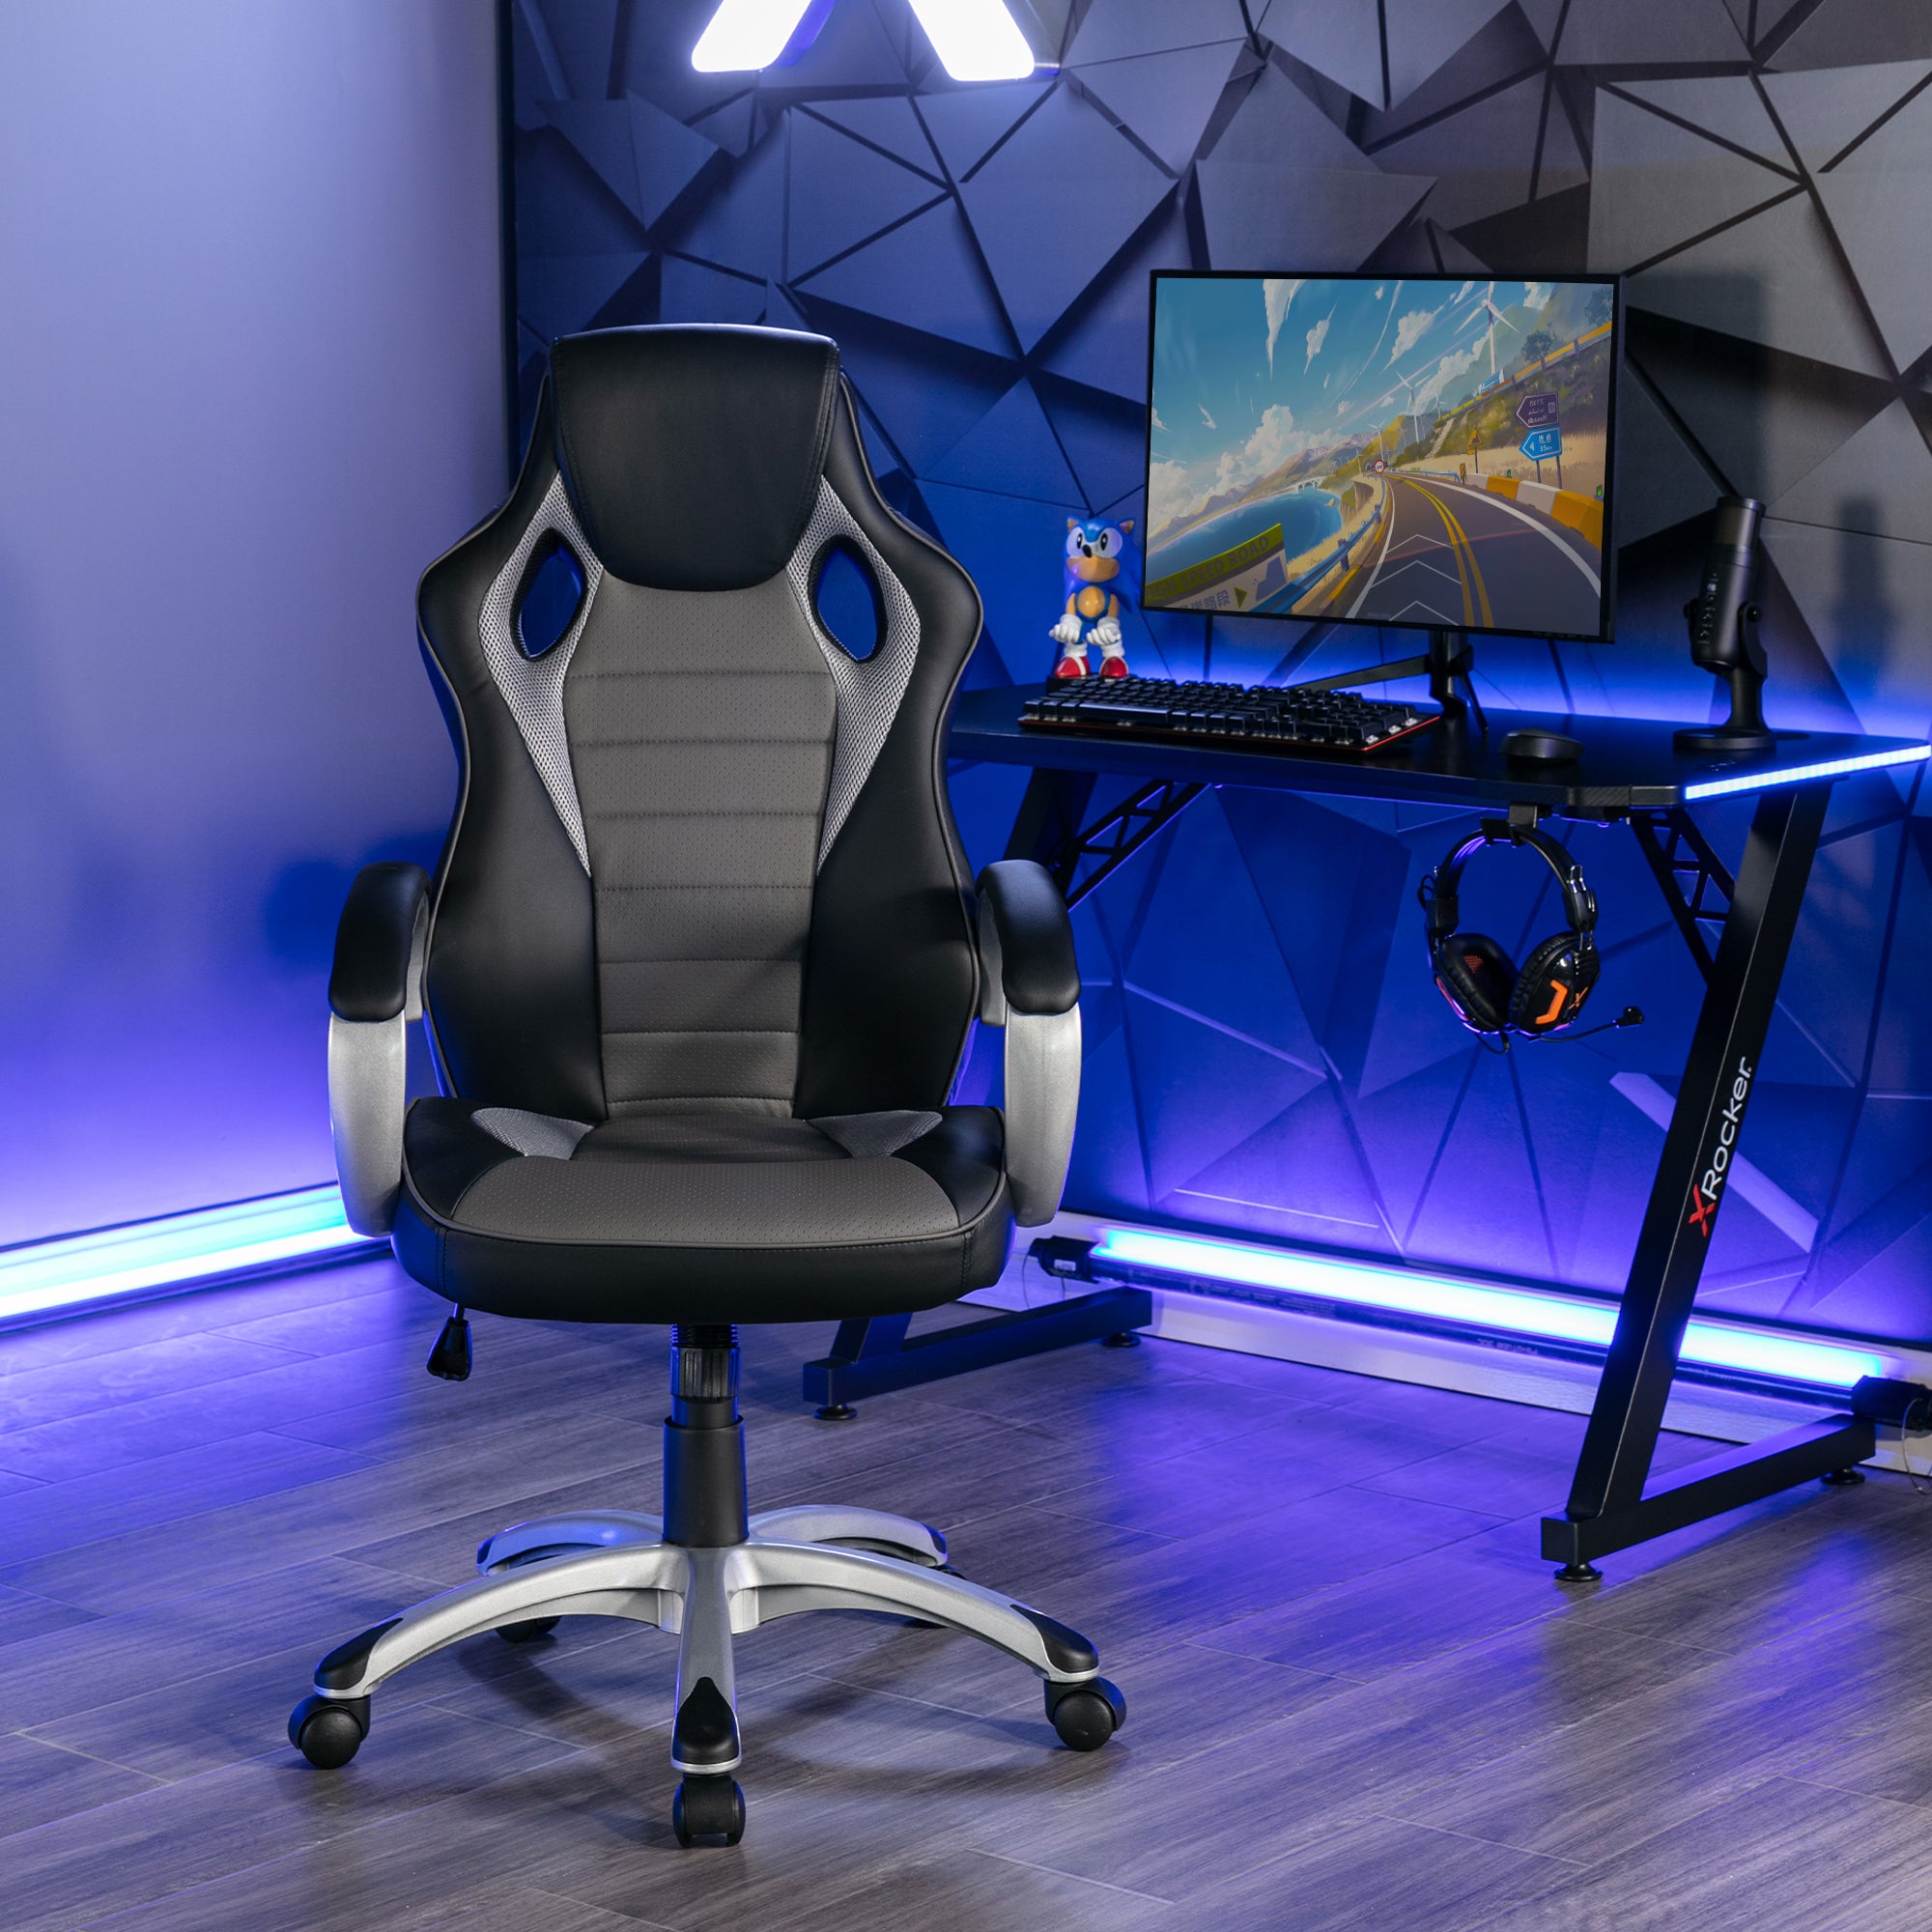 X Rocker Cobra LED Gaming Desk and Thrasher PC Gaming Chair Bundle